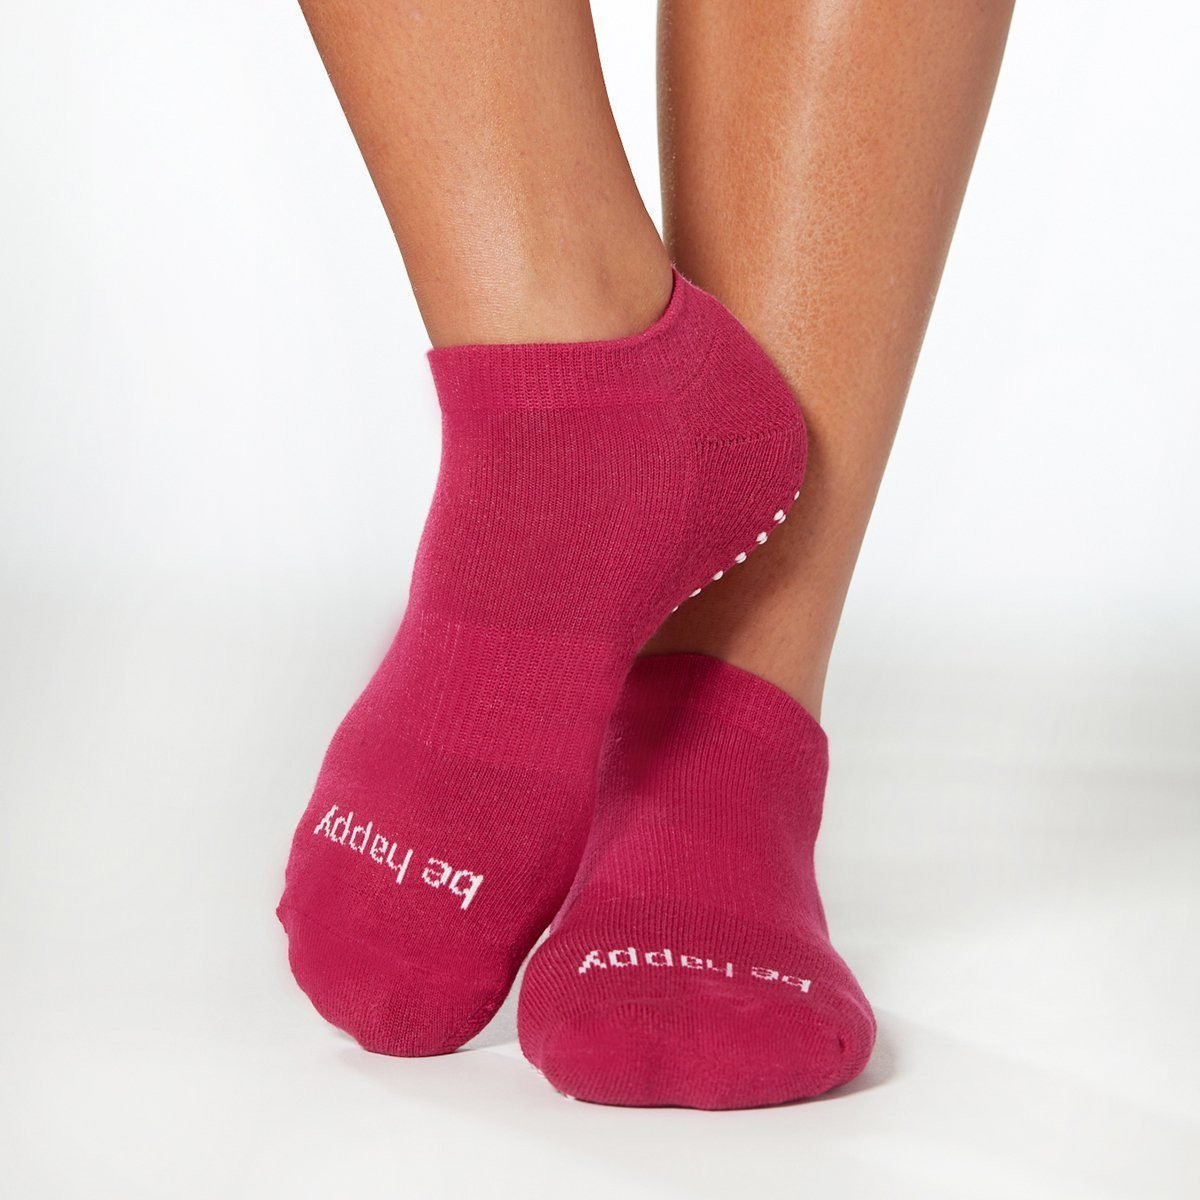 Sticky Be Grip Socks - Be Happy Affirmation - Burgundy Colour